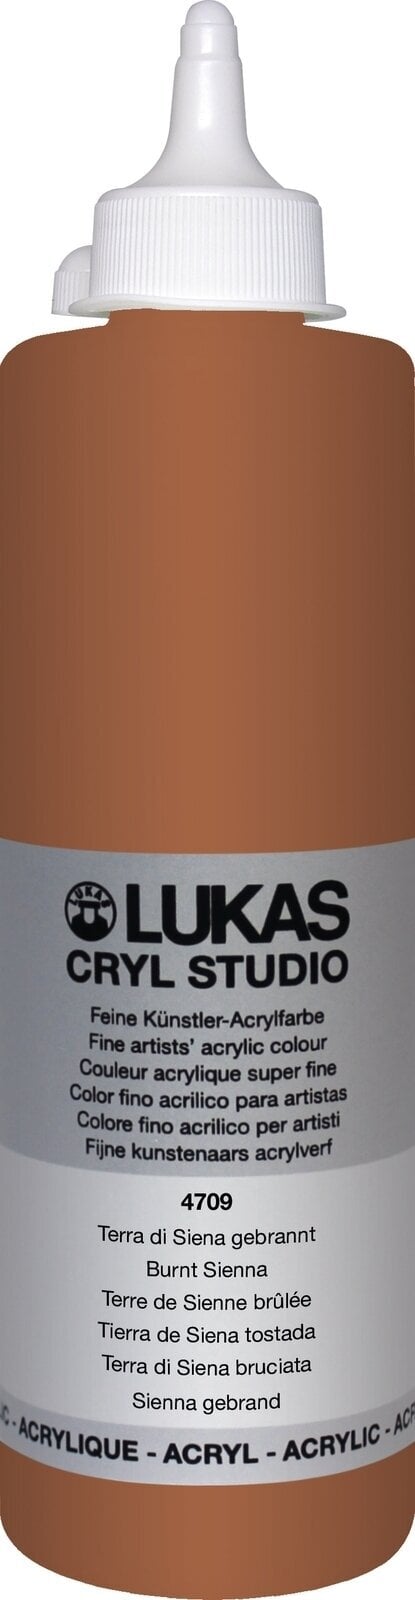 Acrylic Paint Lukas Cryl Studio Acrylic Paint Plastic Bottle Acrylic Paint Burnt Sienna 500 ml 1 pc